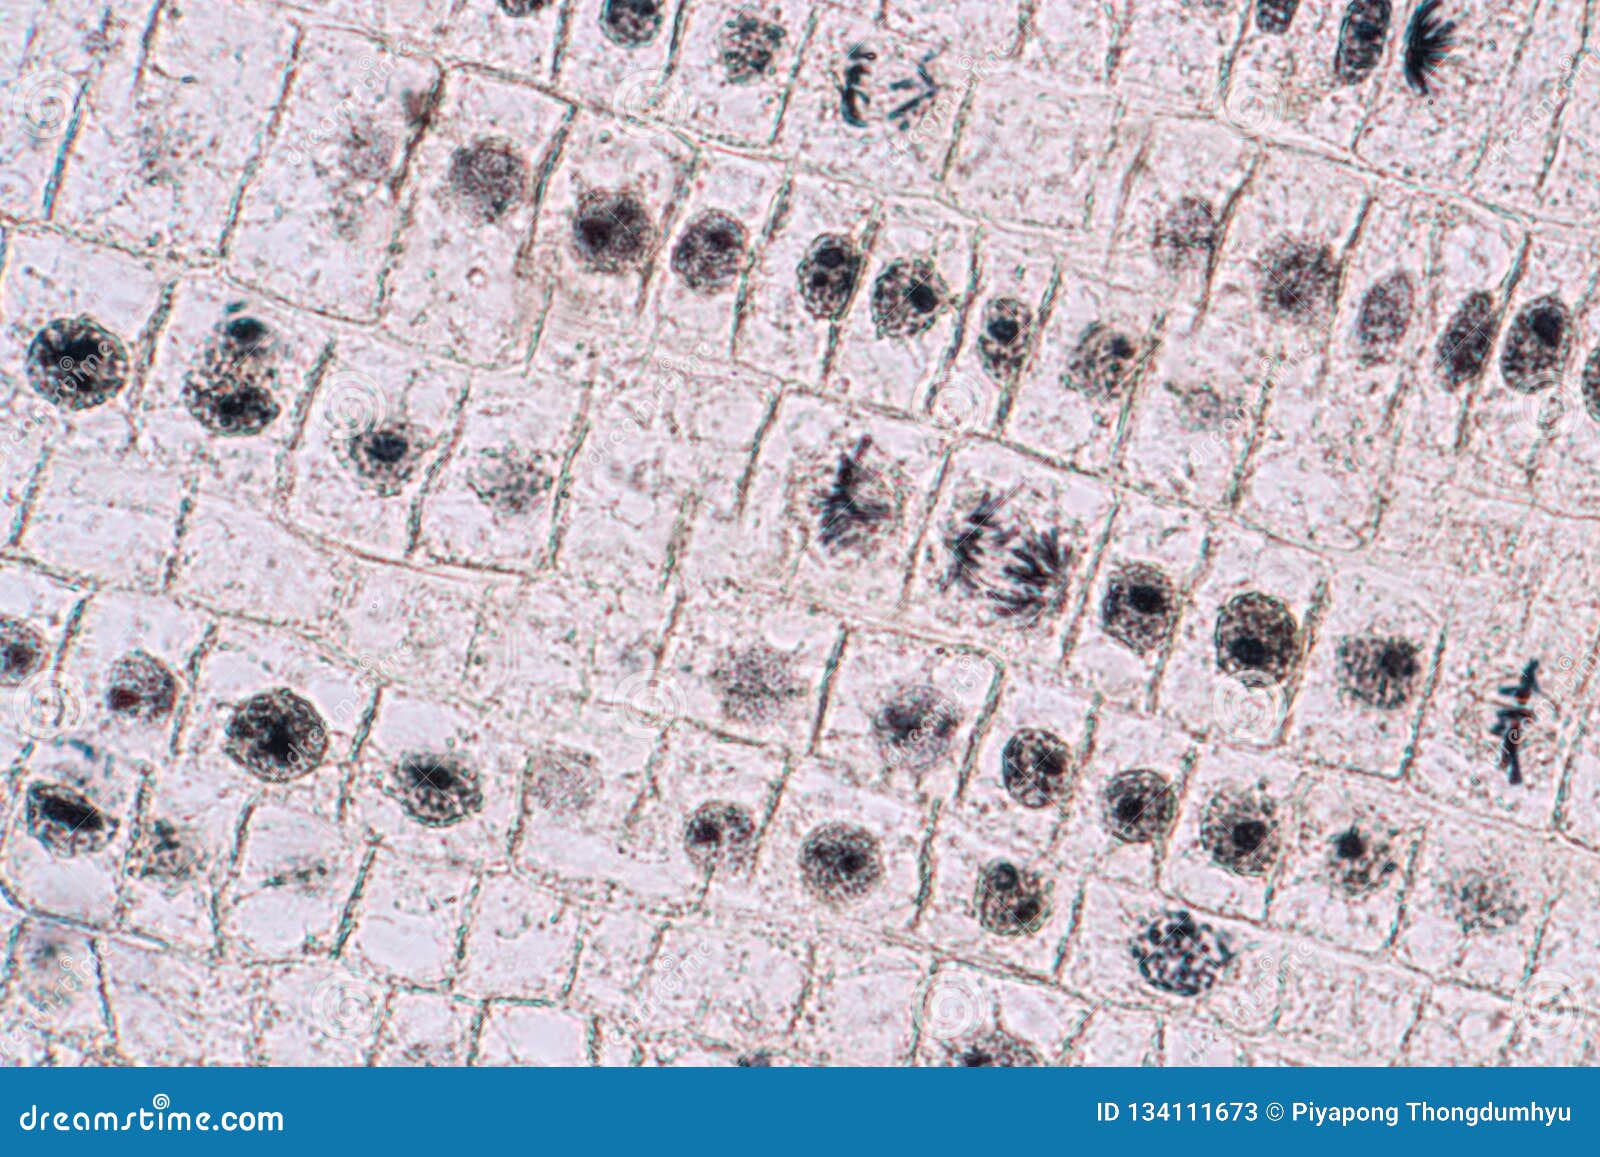 Cellule De Mitose Dans L Astuce De Racine De L Oignon Sous Un Microscope Image Stock Image Du Nucleolus Death